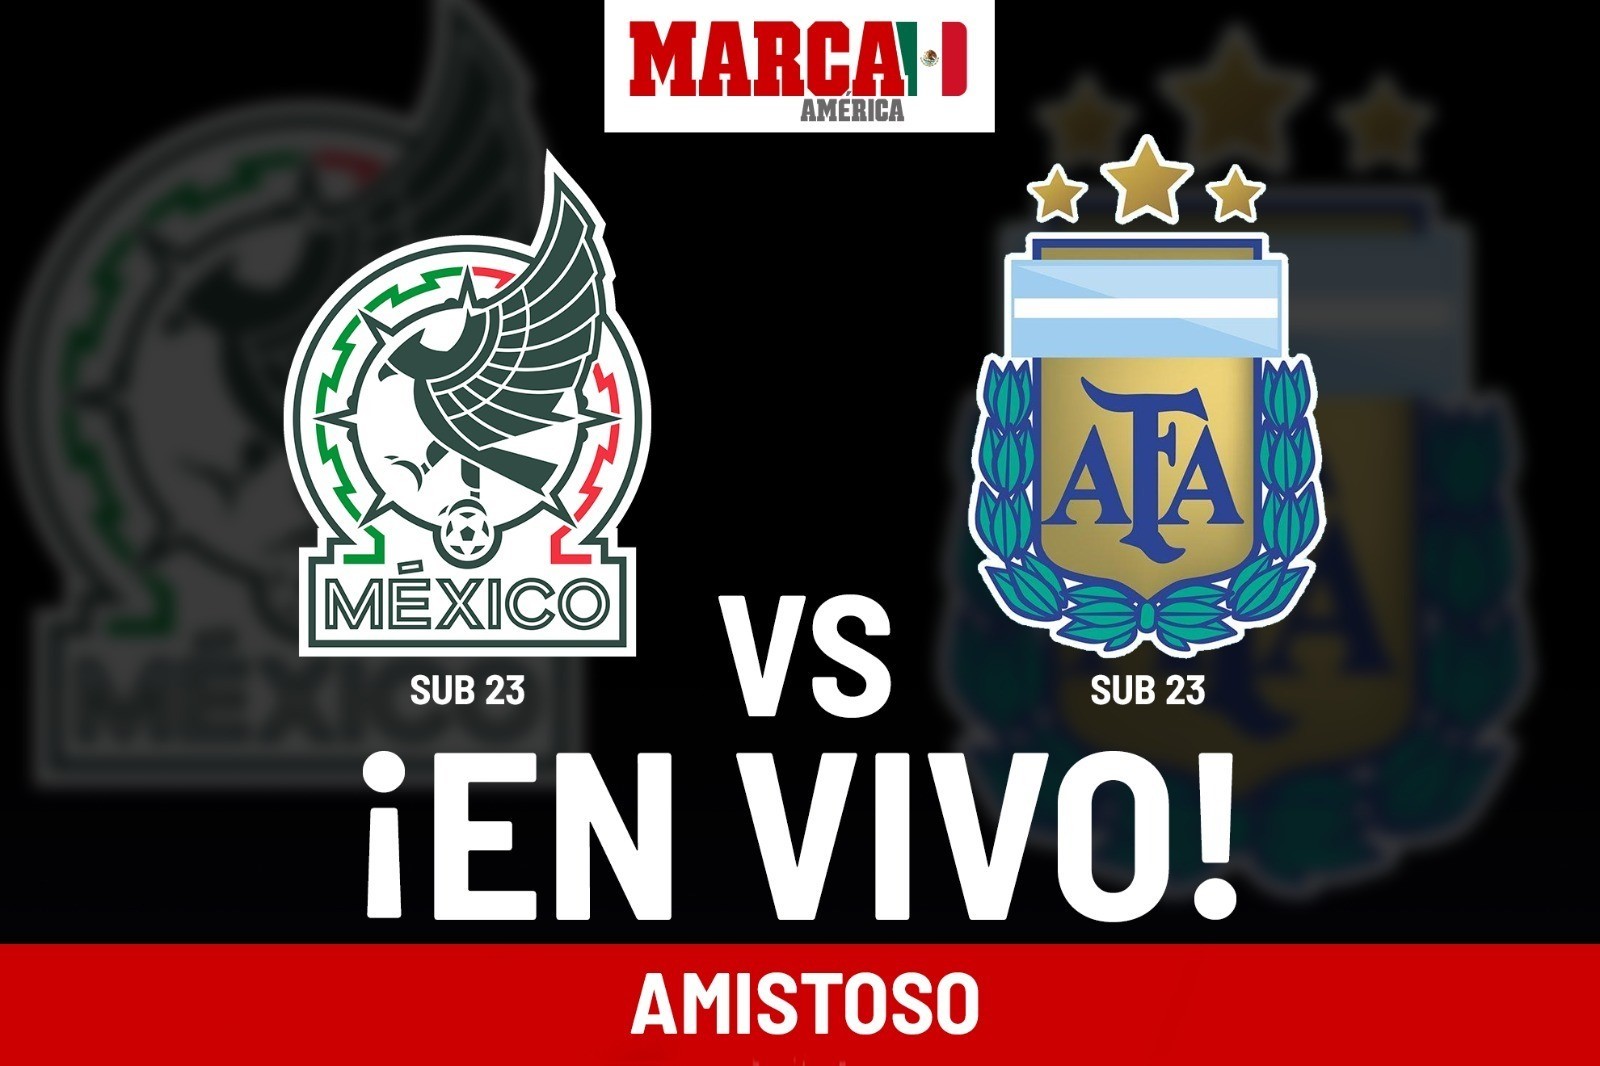 Mxico Sub-23 vs Argentina. Partido hoy - Amistoso de la Seleccin Mexicana: Tri golea 3-0 a la Albiceleste de Mascherano